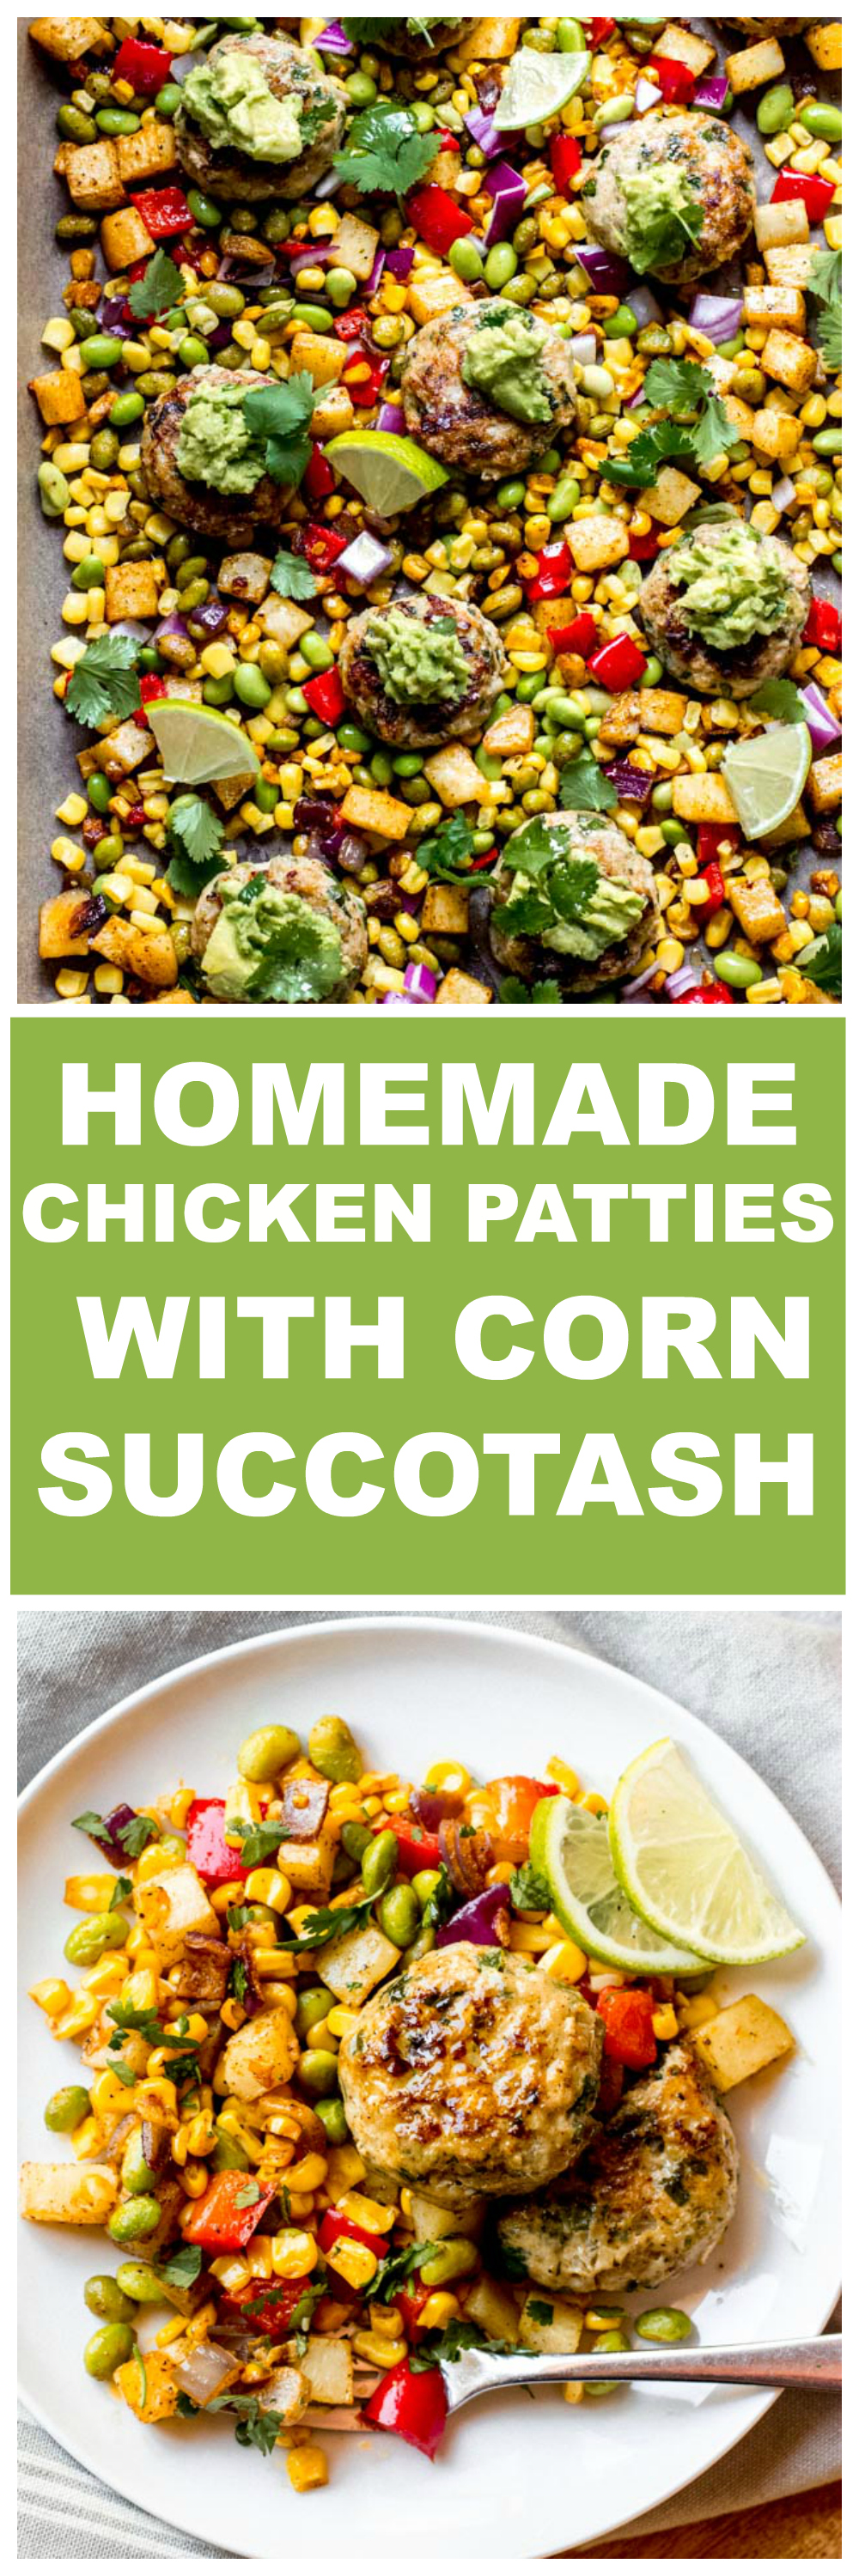 Homemade chicken patties with corn succotash